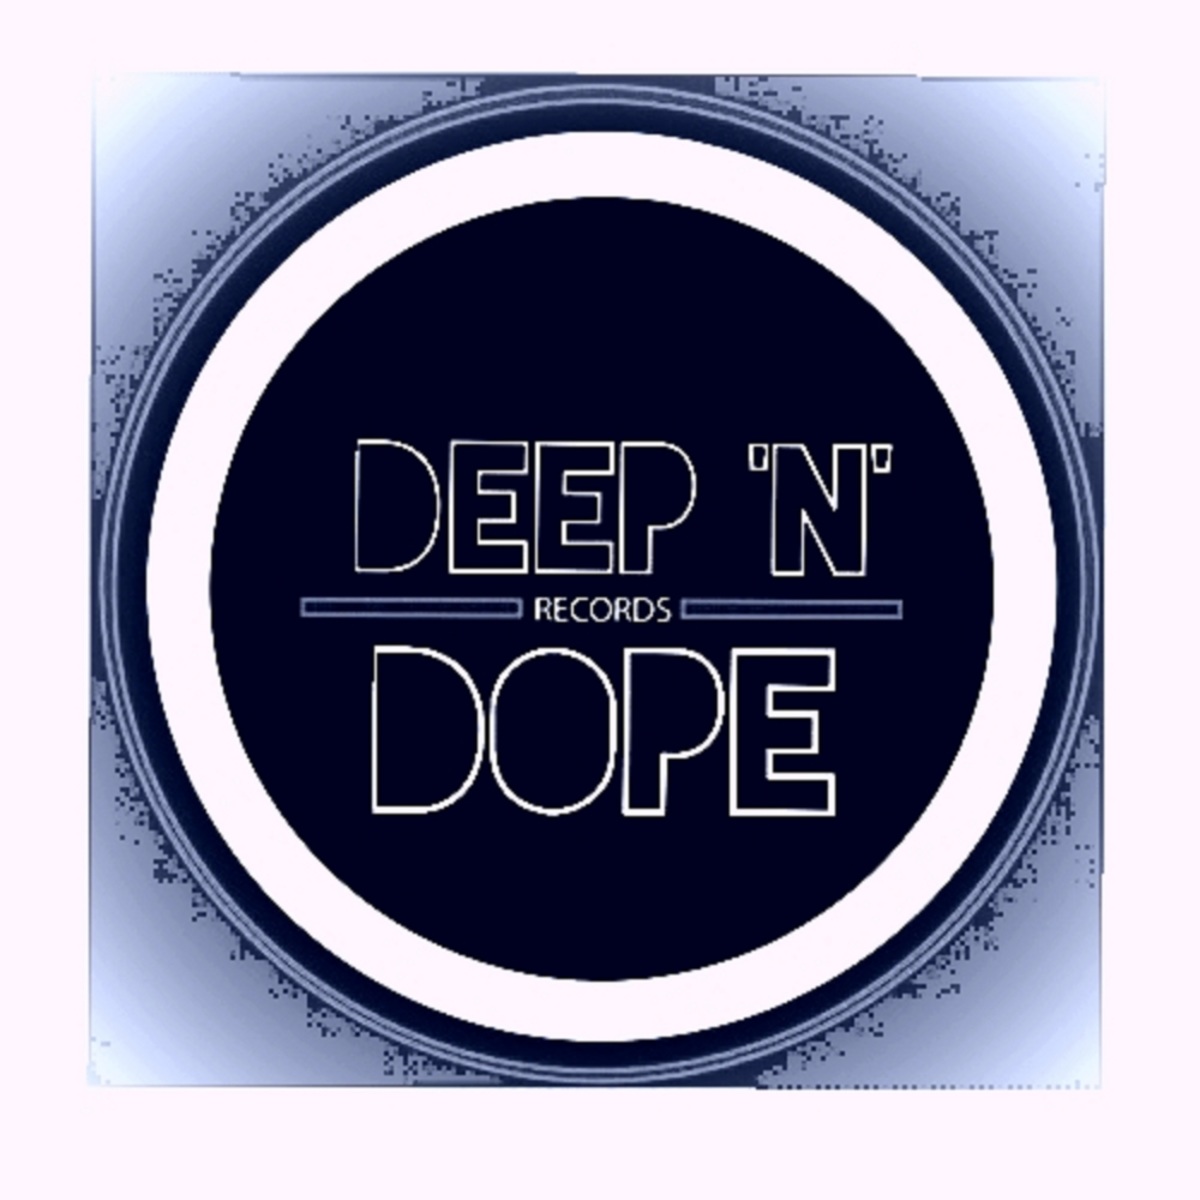 Late Nite 'DUB' Addict - 3AM JAZZ / DEEP 'N' DOPE RECORDS (UK)